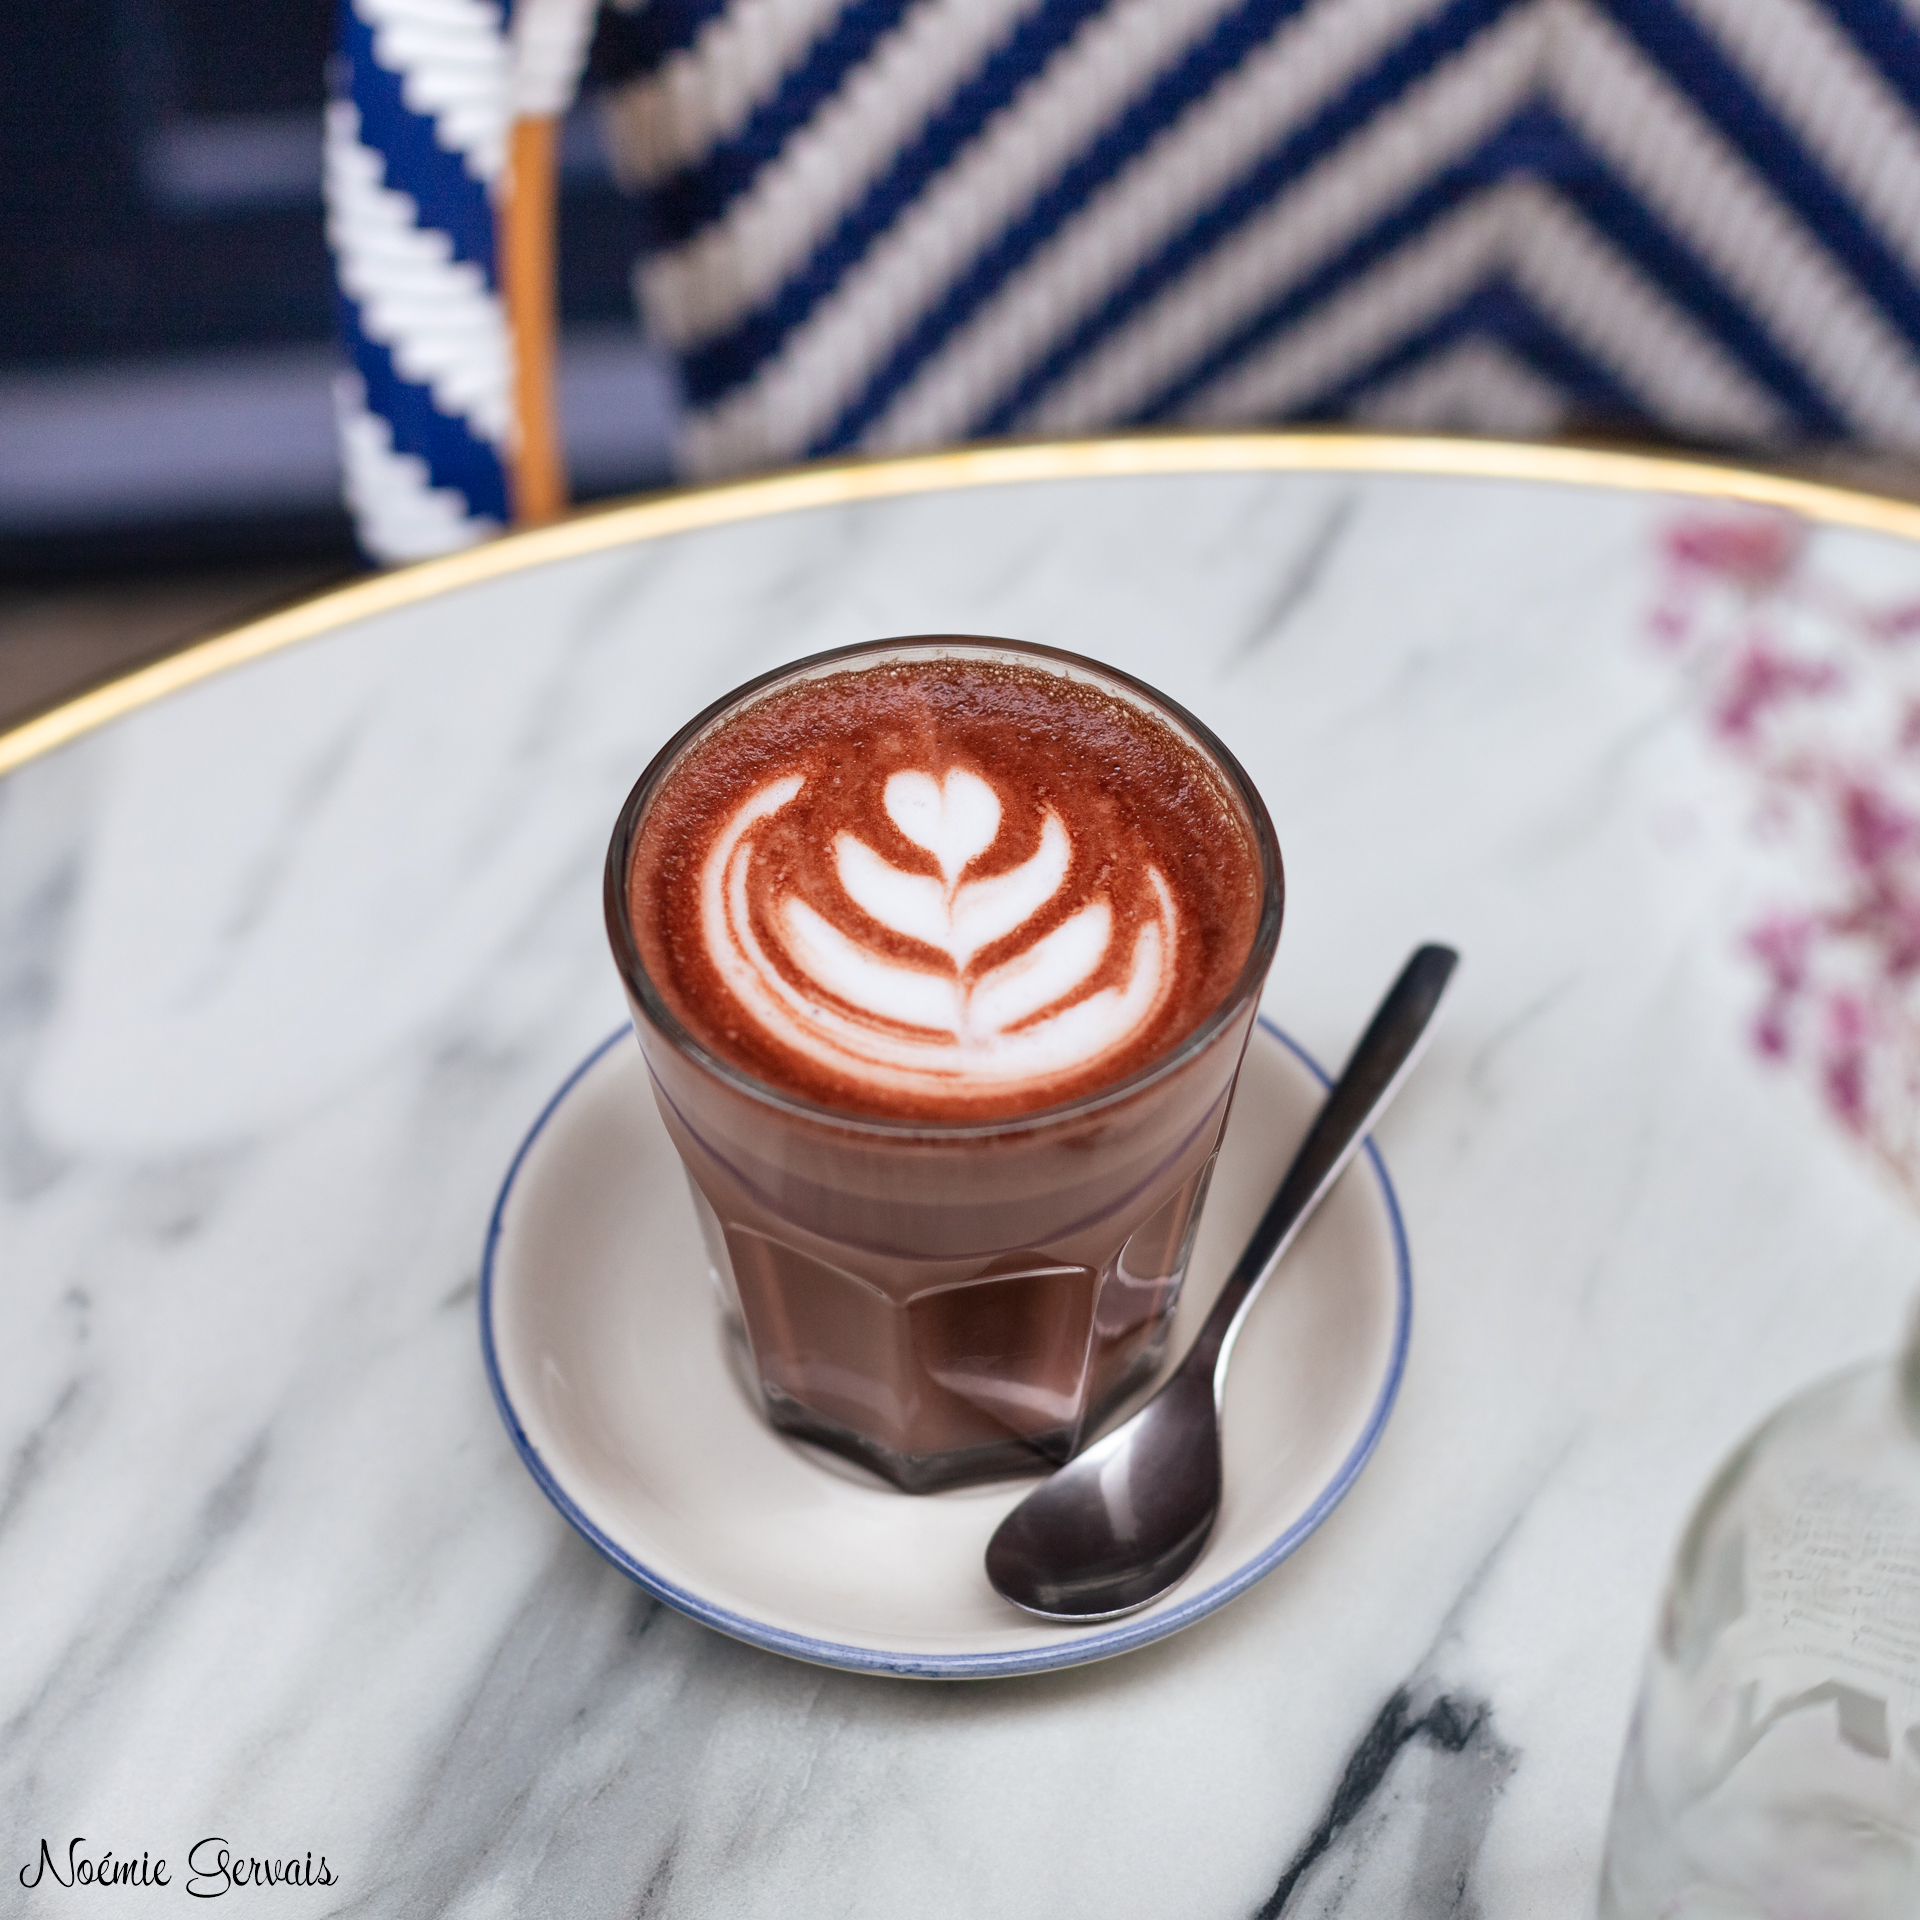 Photographe culinaire Chocolat chaud dans un coffee shop